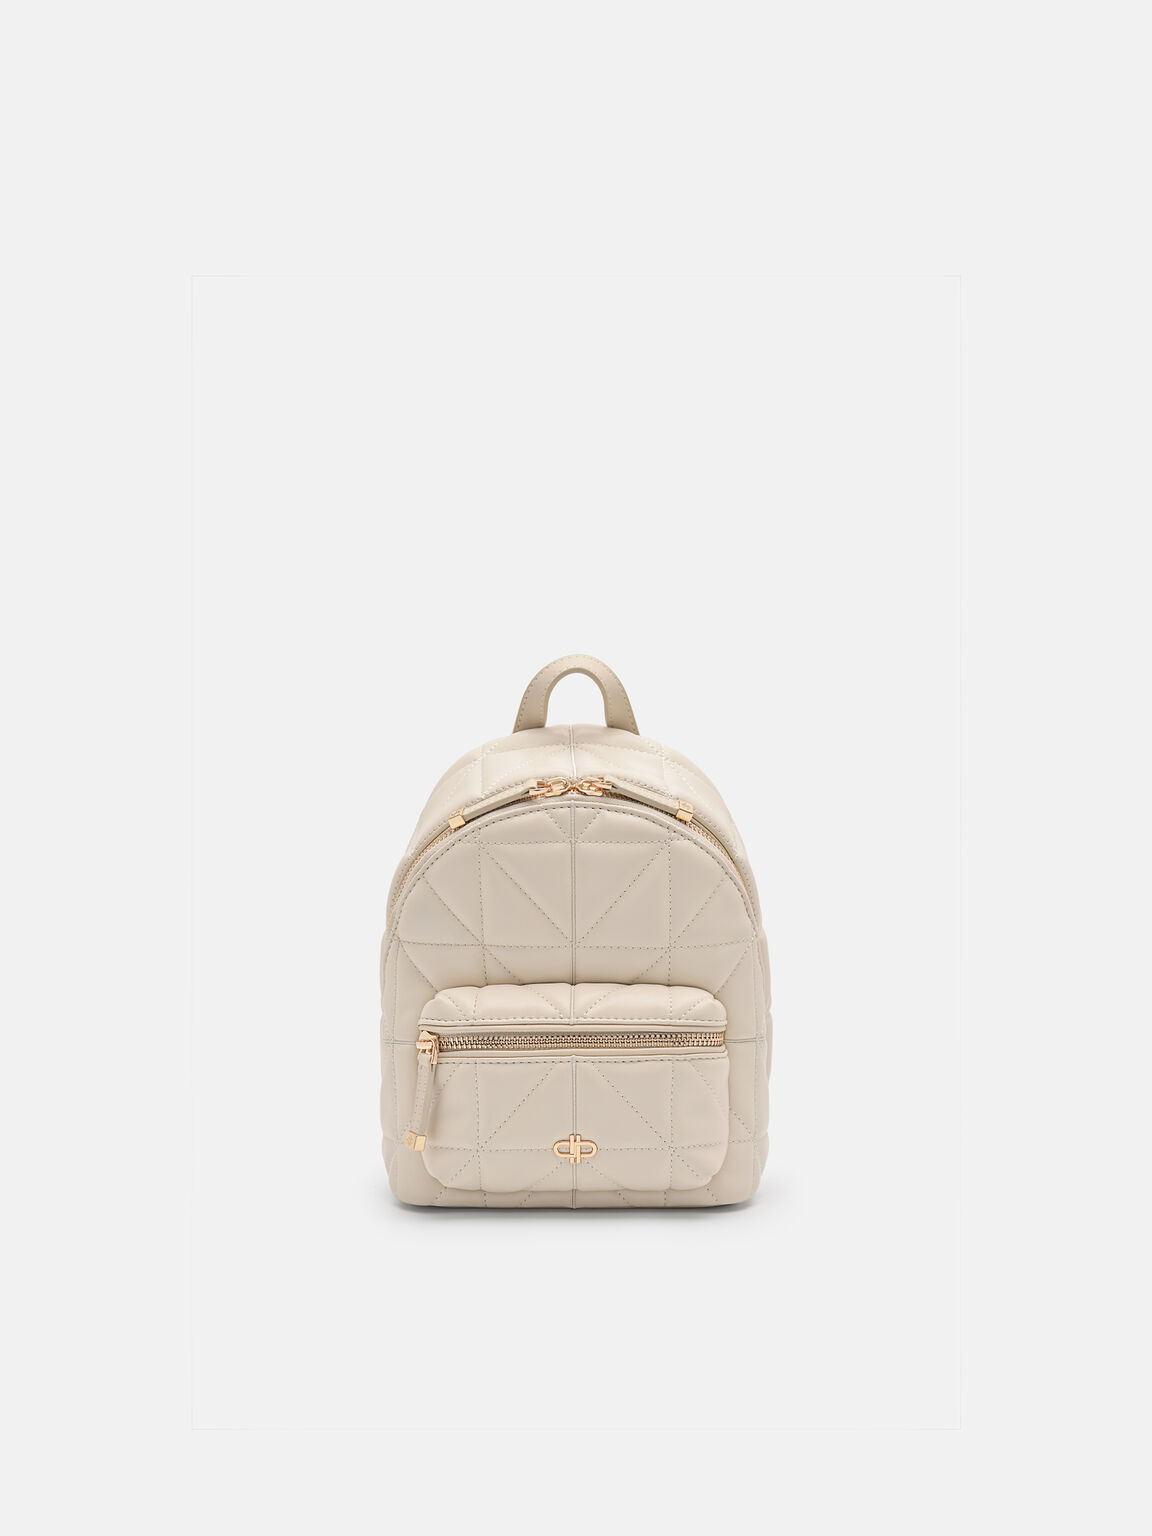 PEDRO Icon Mini Backpack in Pixel, Beige, hi-res